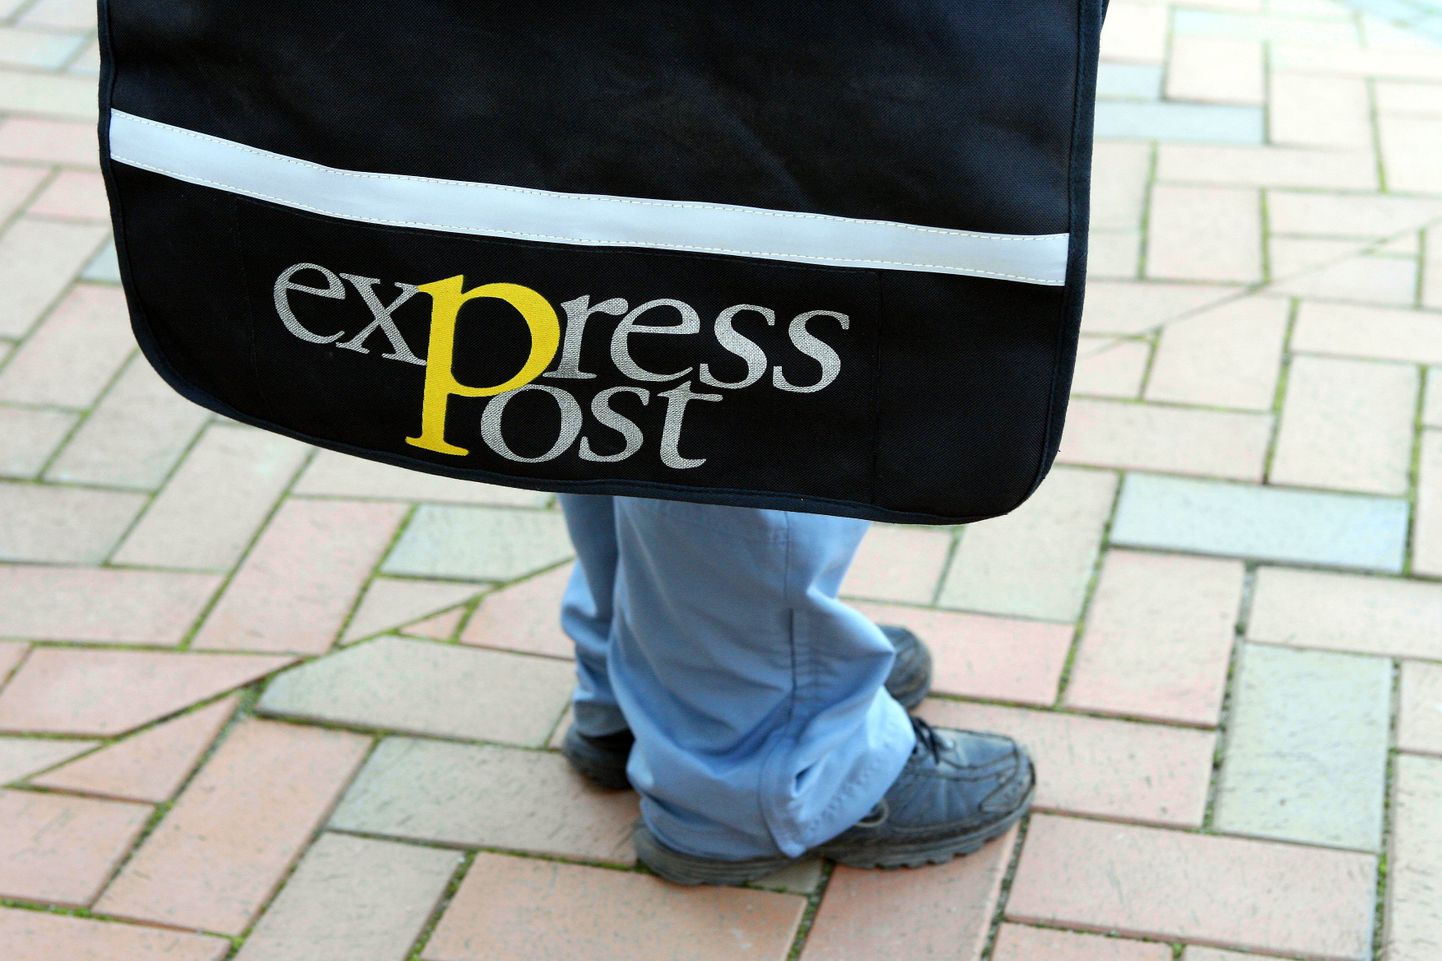 Express Post.